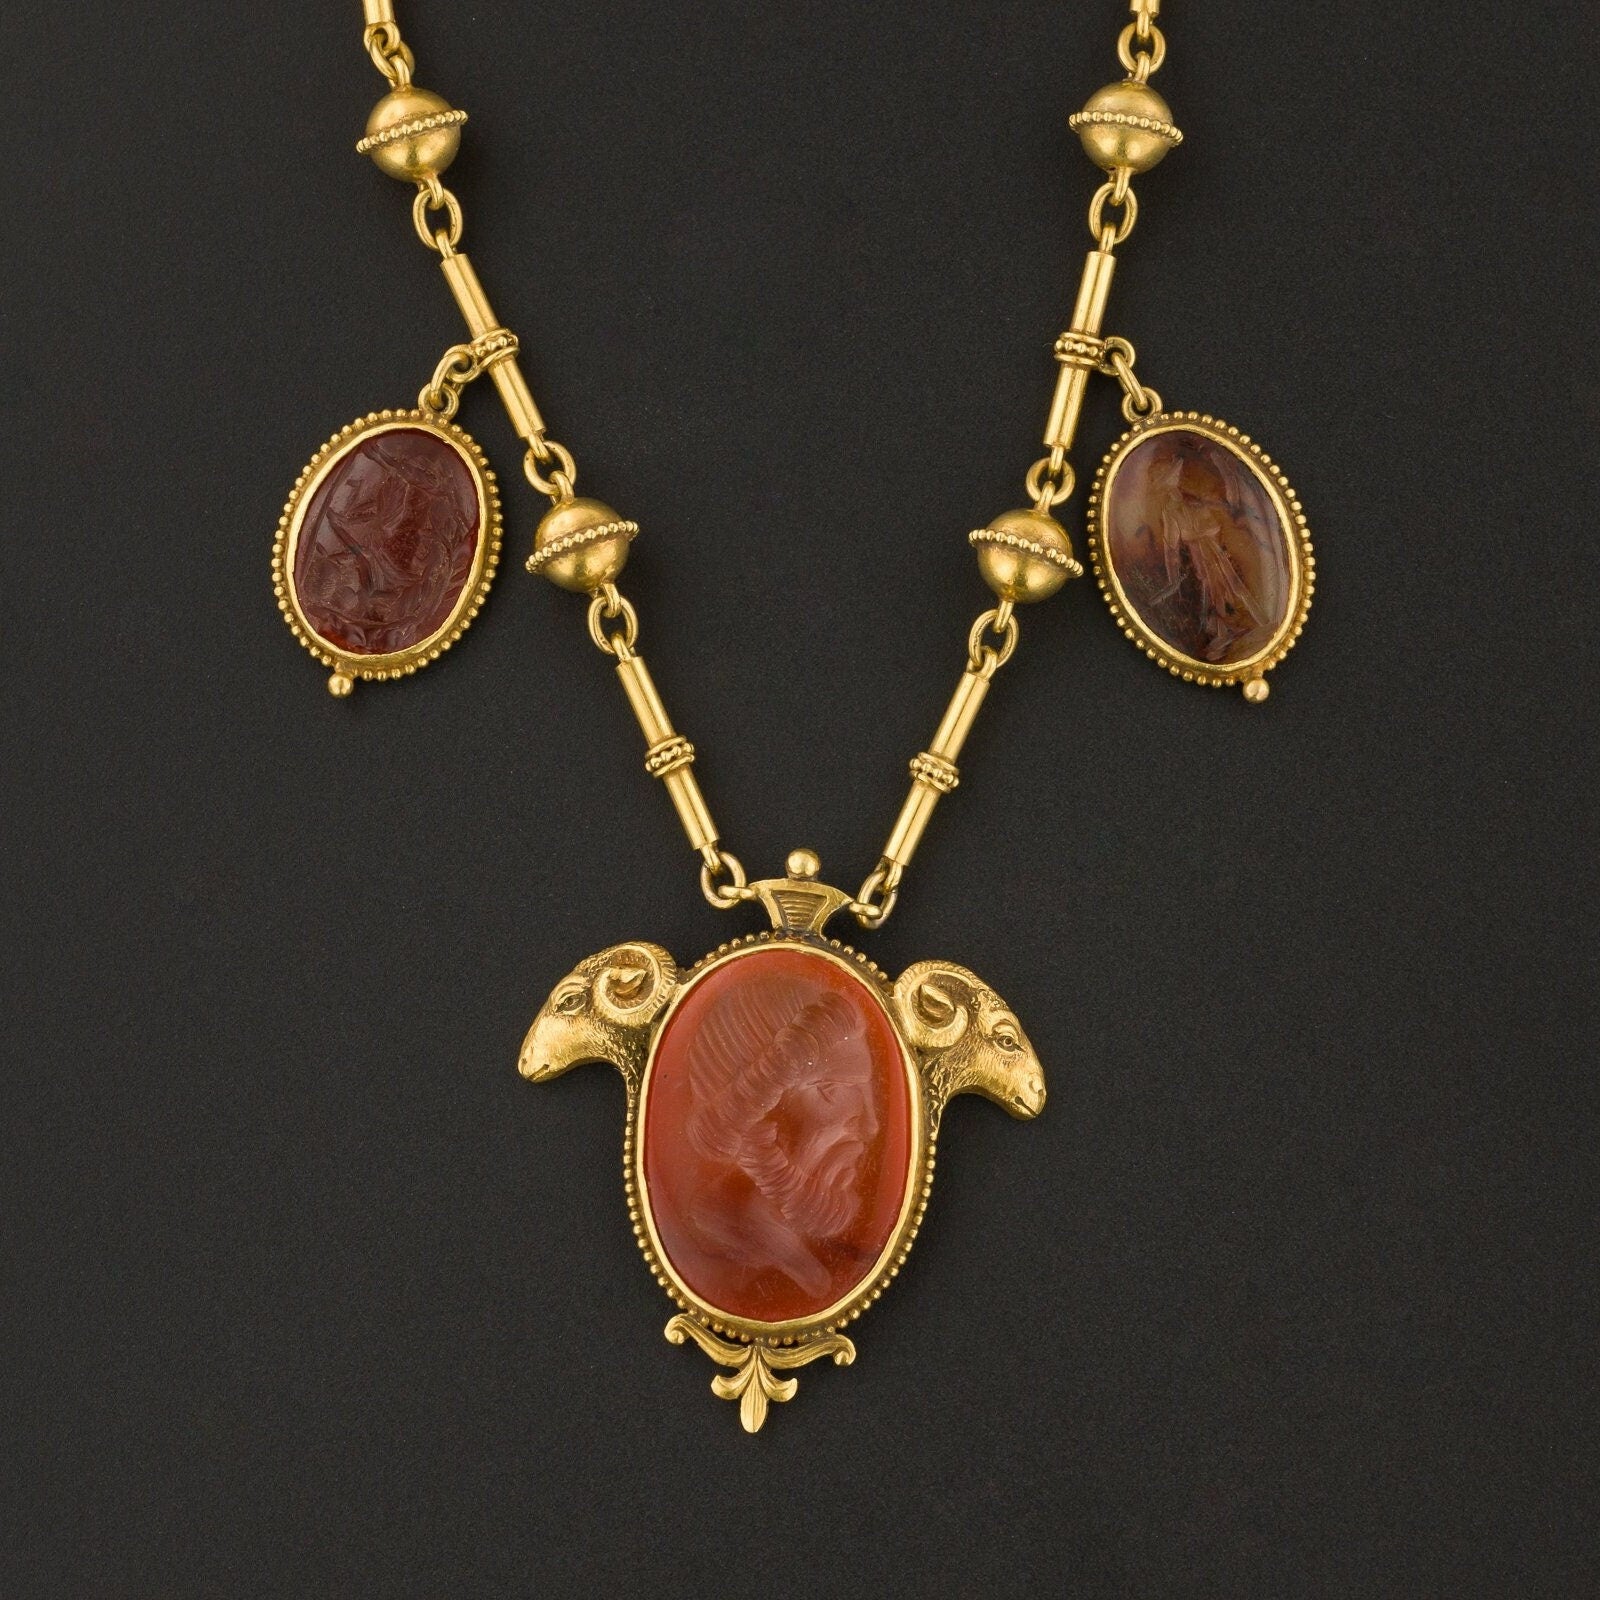 Antique Etruscan Revival Intaglio Necklace of 18k Gold